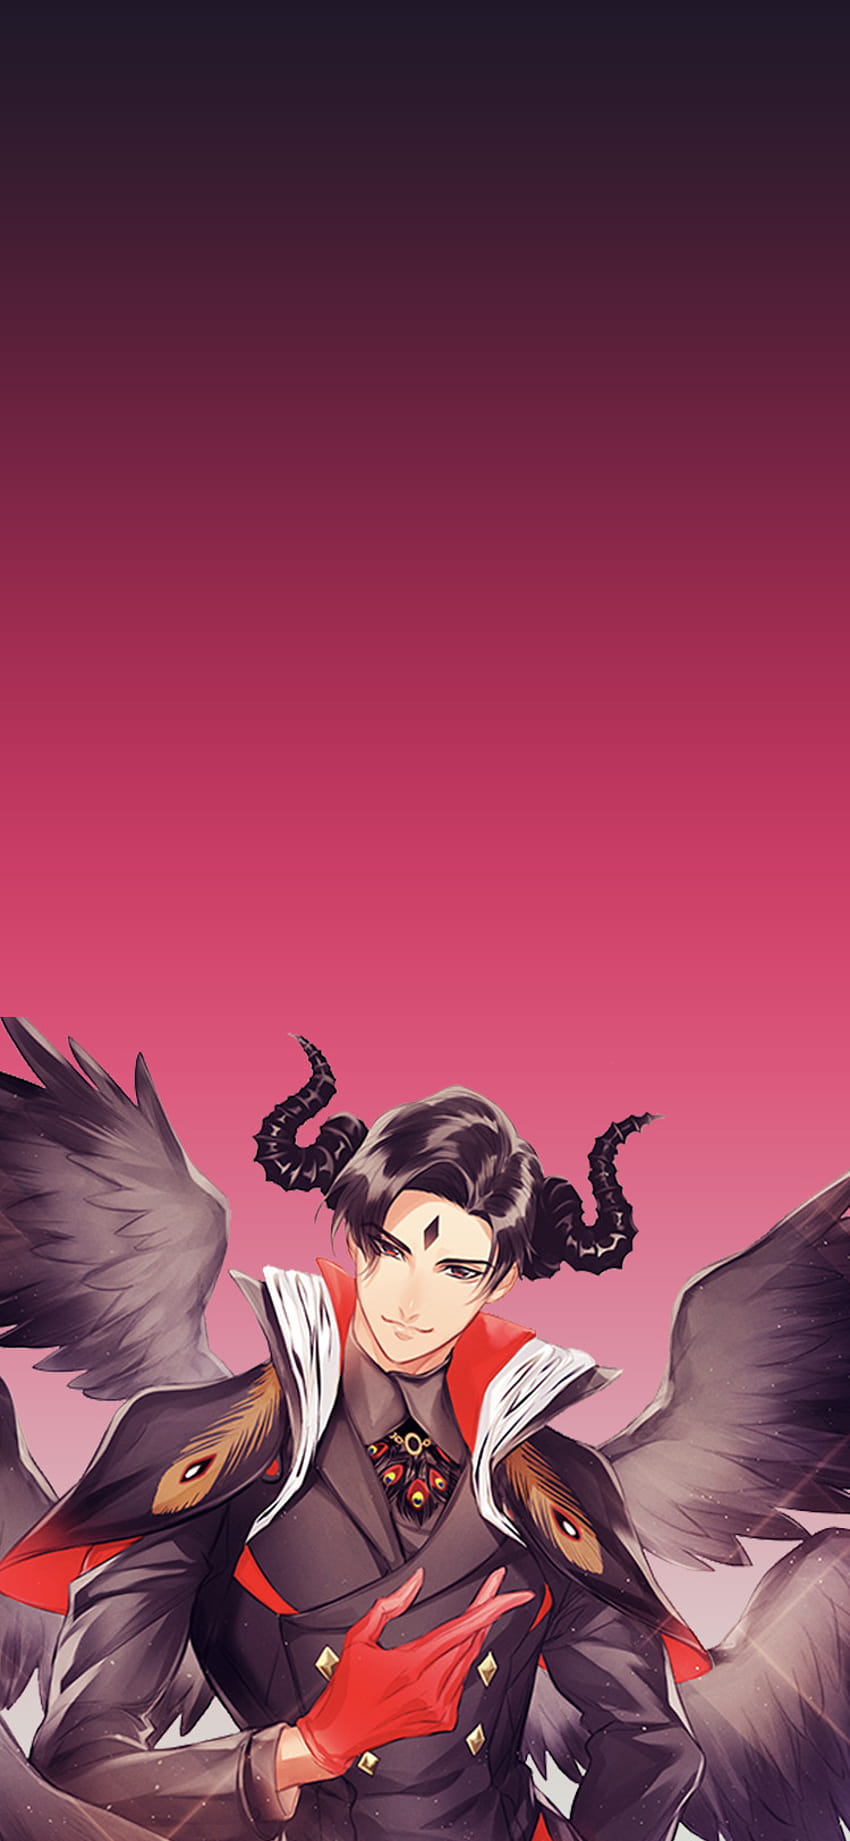 Lucifer anime concept by DigitalDreamsArt on DeviantArt